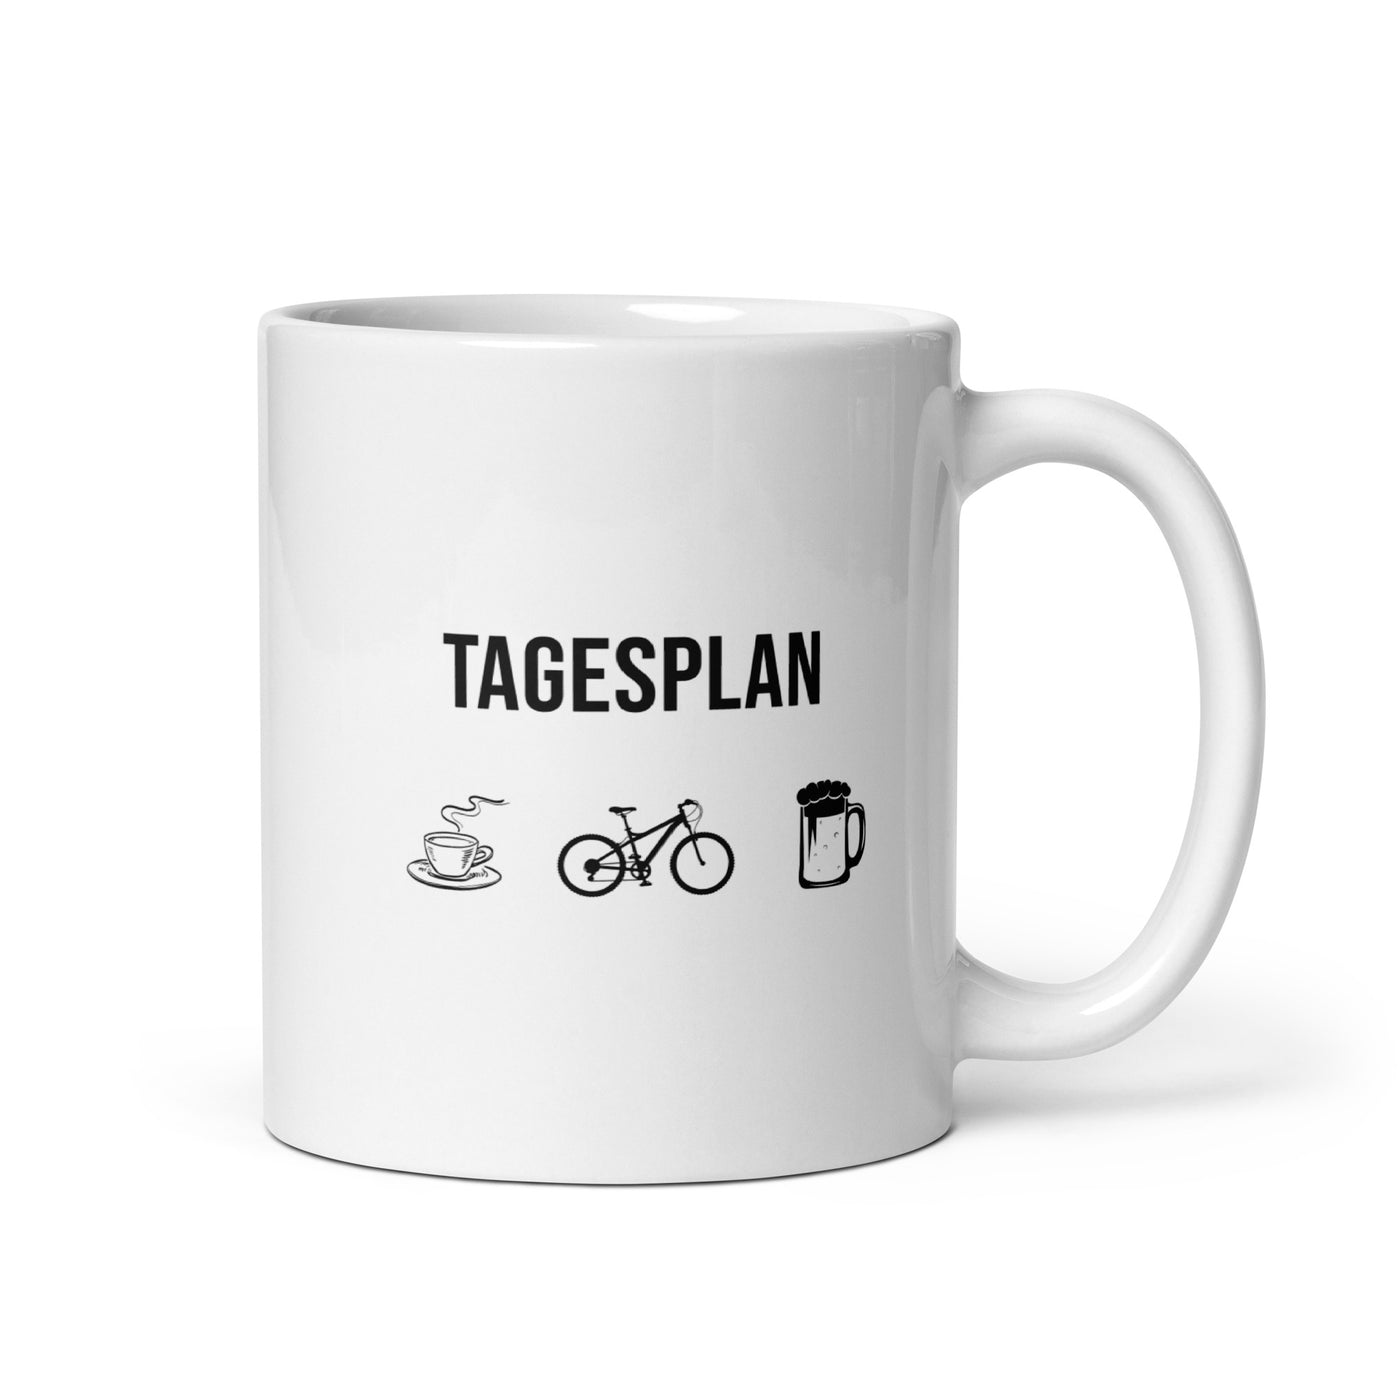 Tagesplan Kaffee, Fahrrad Und Bier - Tasse fahrrad mountainbike